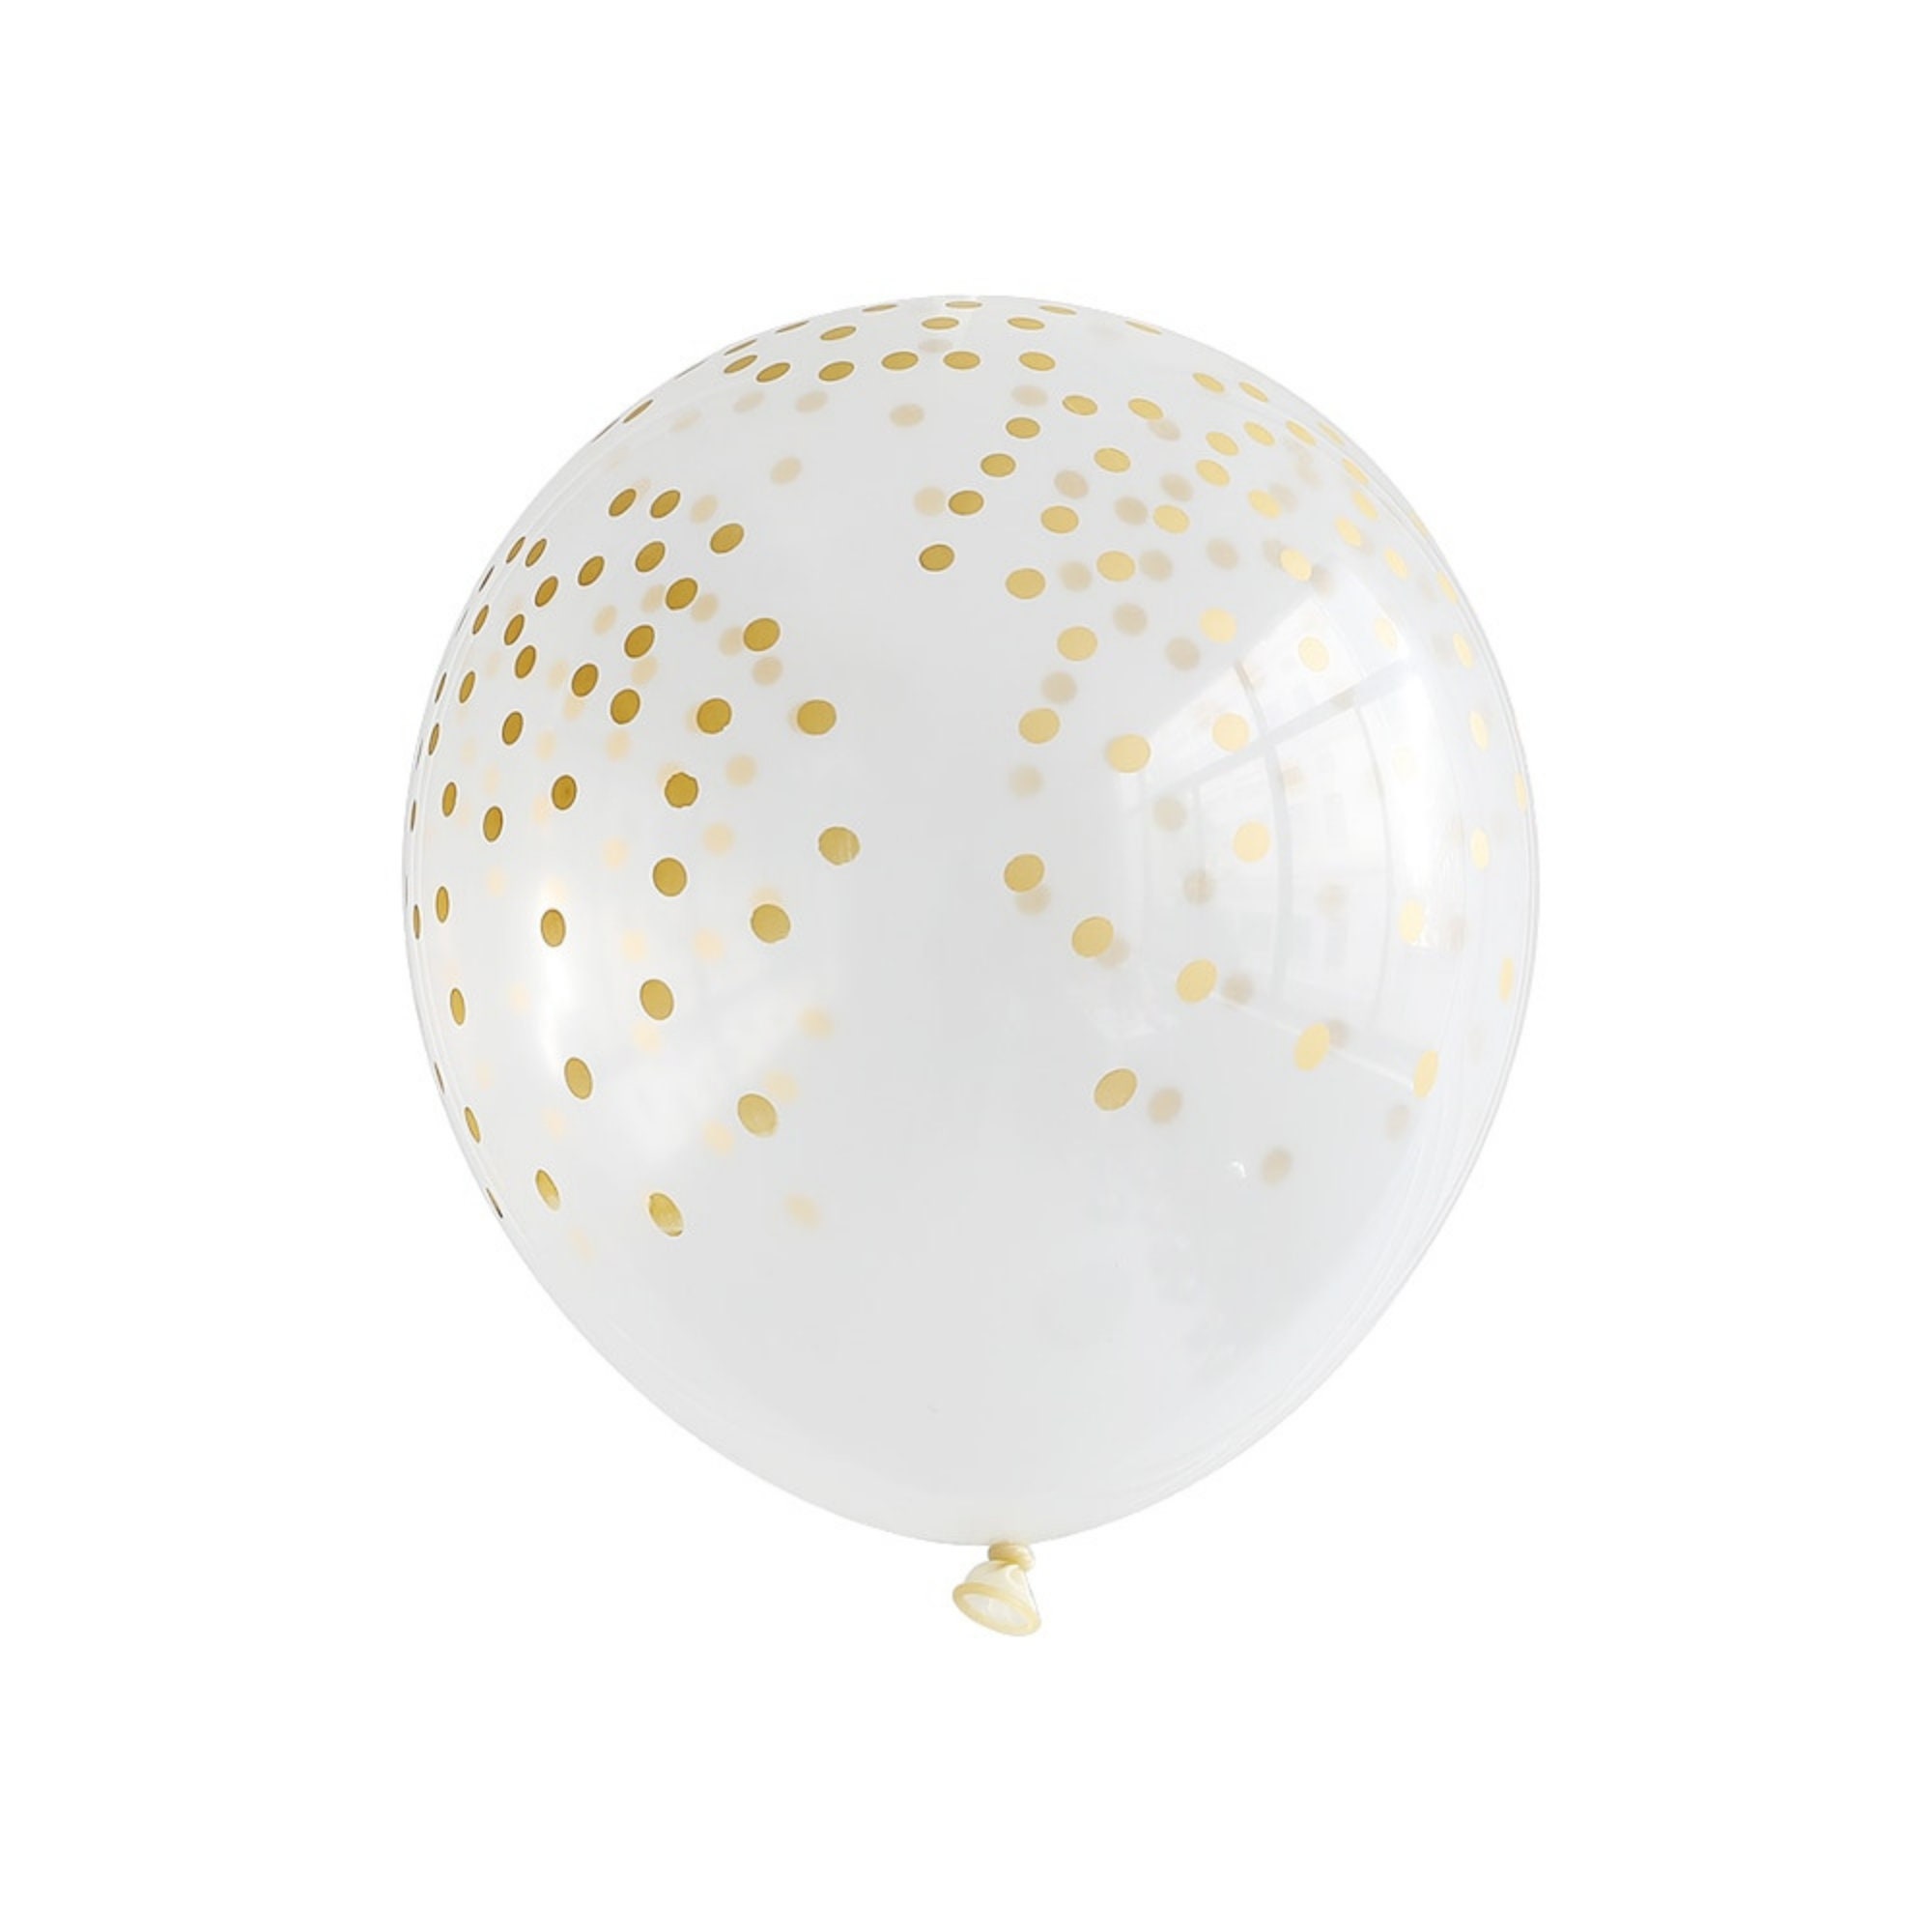 Black & Gold Balloon Arch Kit Polka Dot DIY Garland 149 Pieces